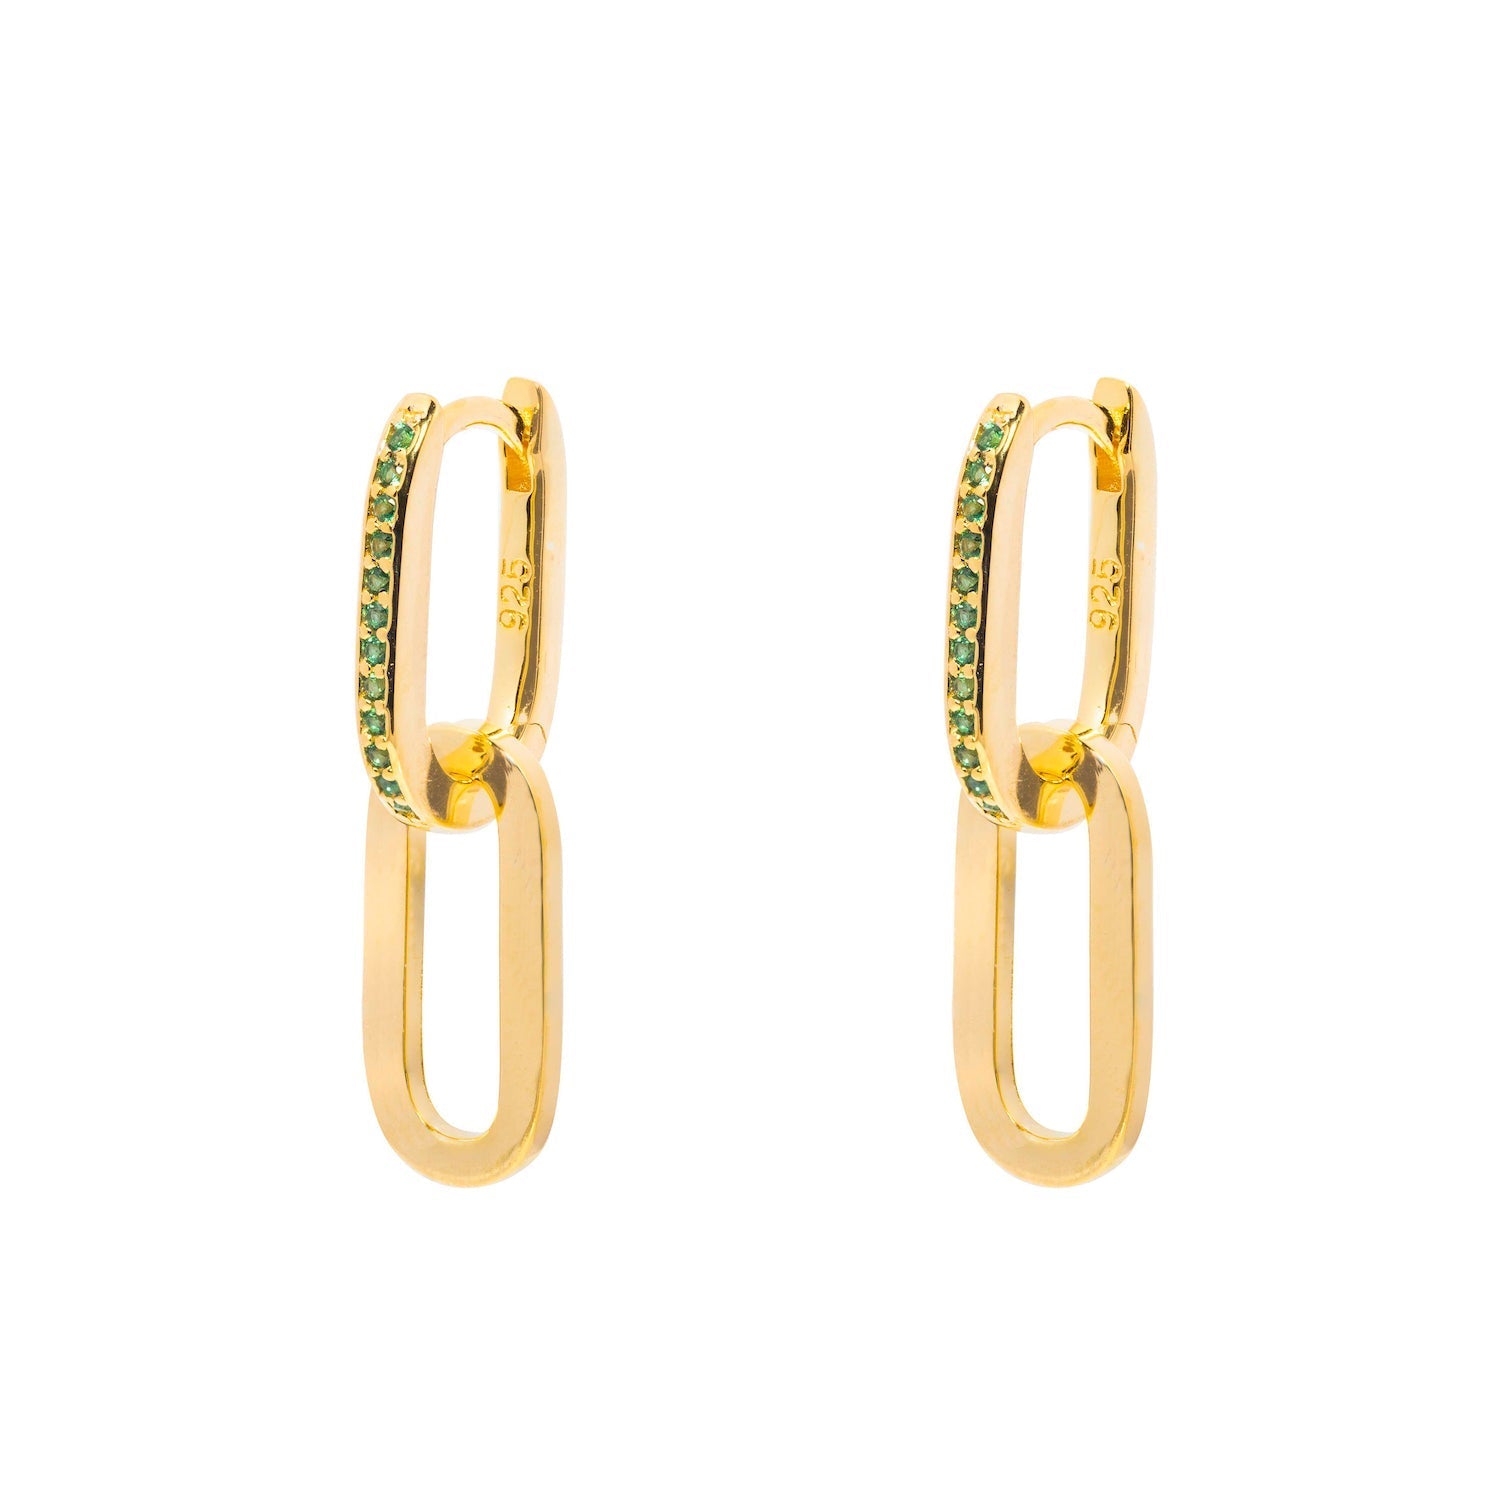 Duo Jewellery Earrings Yellow Gold / Aqua Gold Link With Stone Earrings